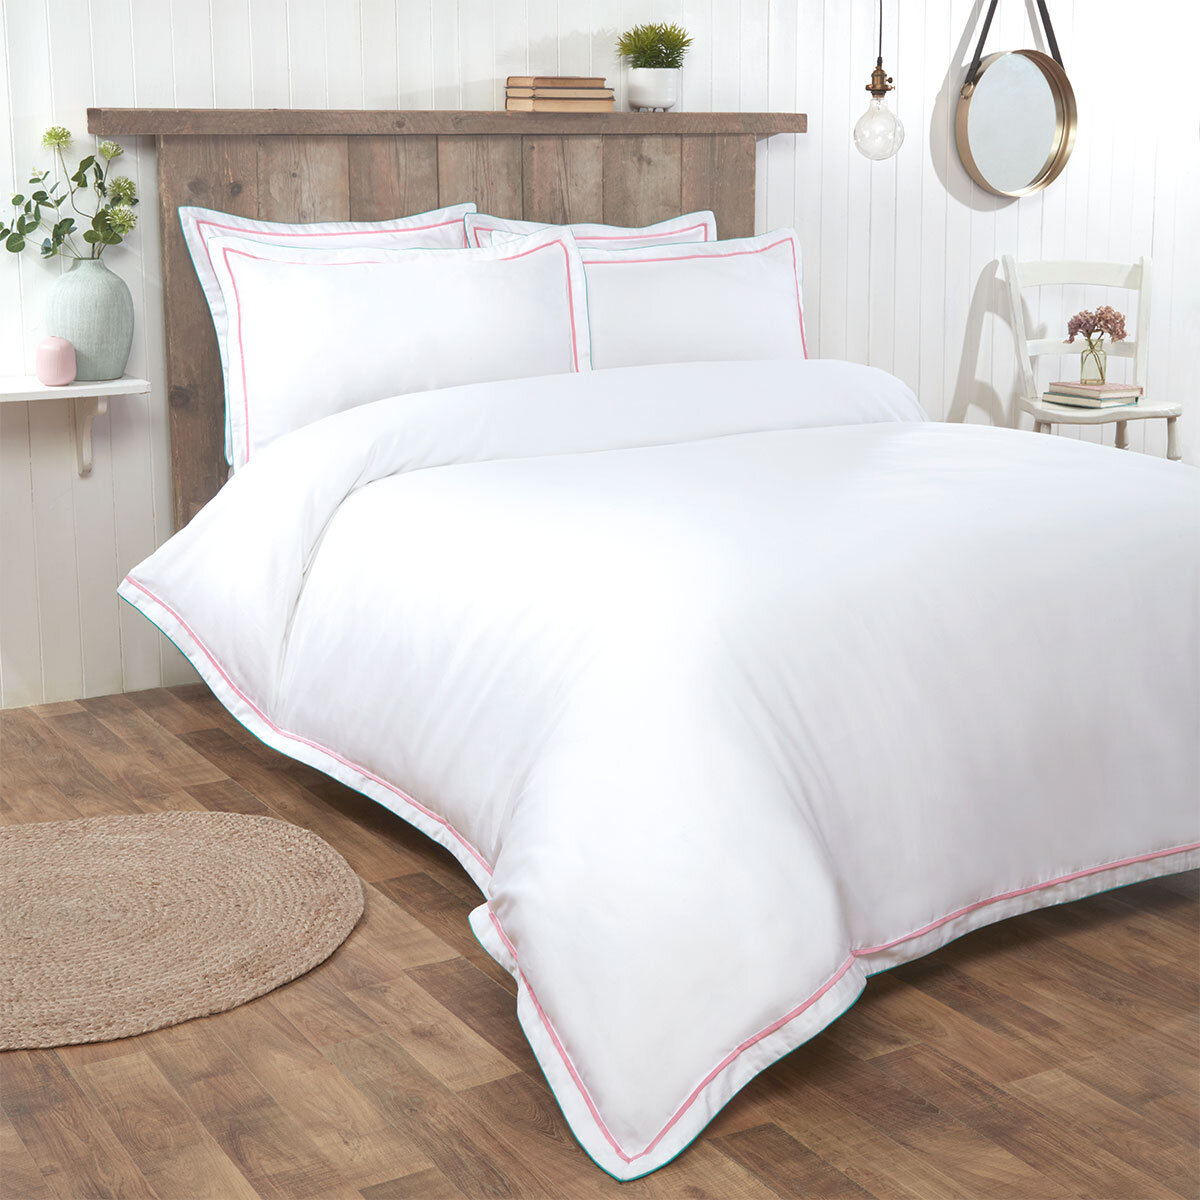 Tabitha Webb White Cotton 3 Piece Bed Set in 4 Sizes